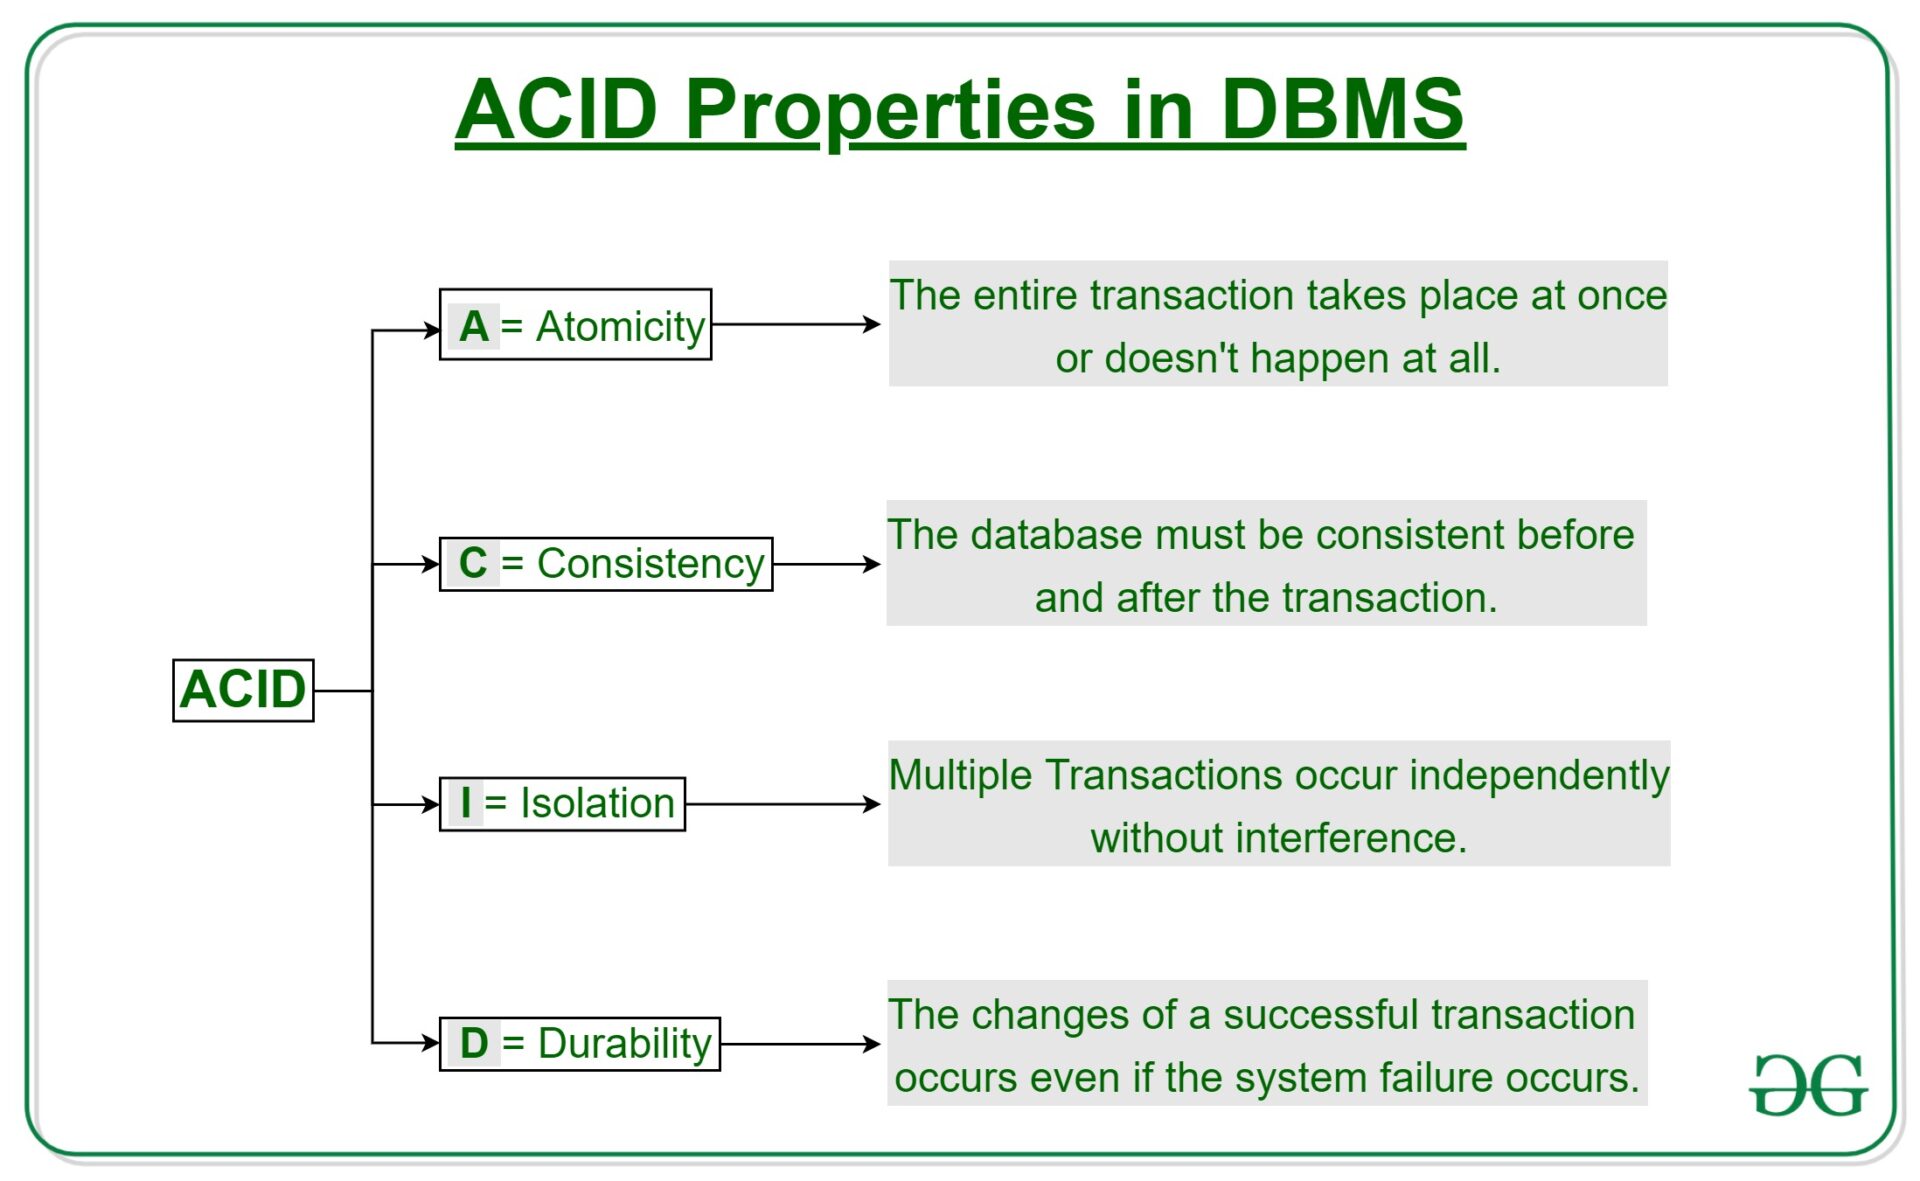 ACID properties in DBMS